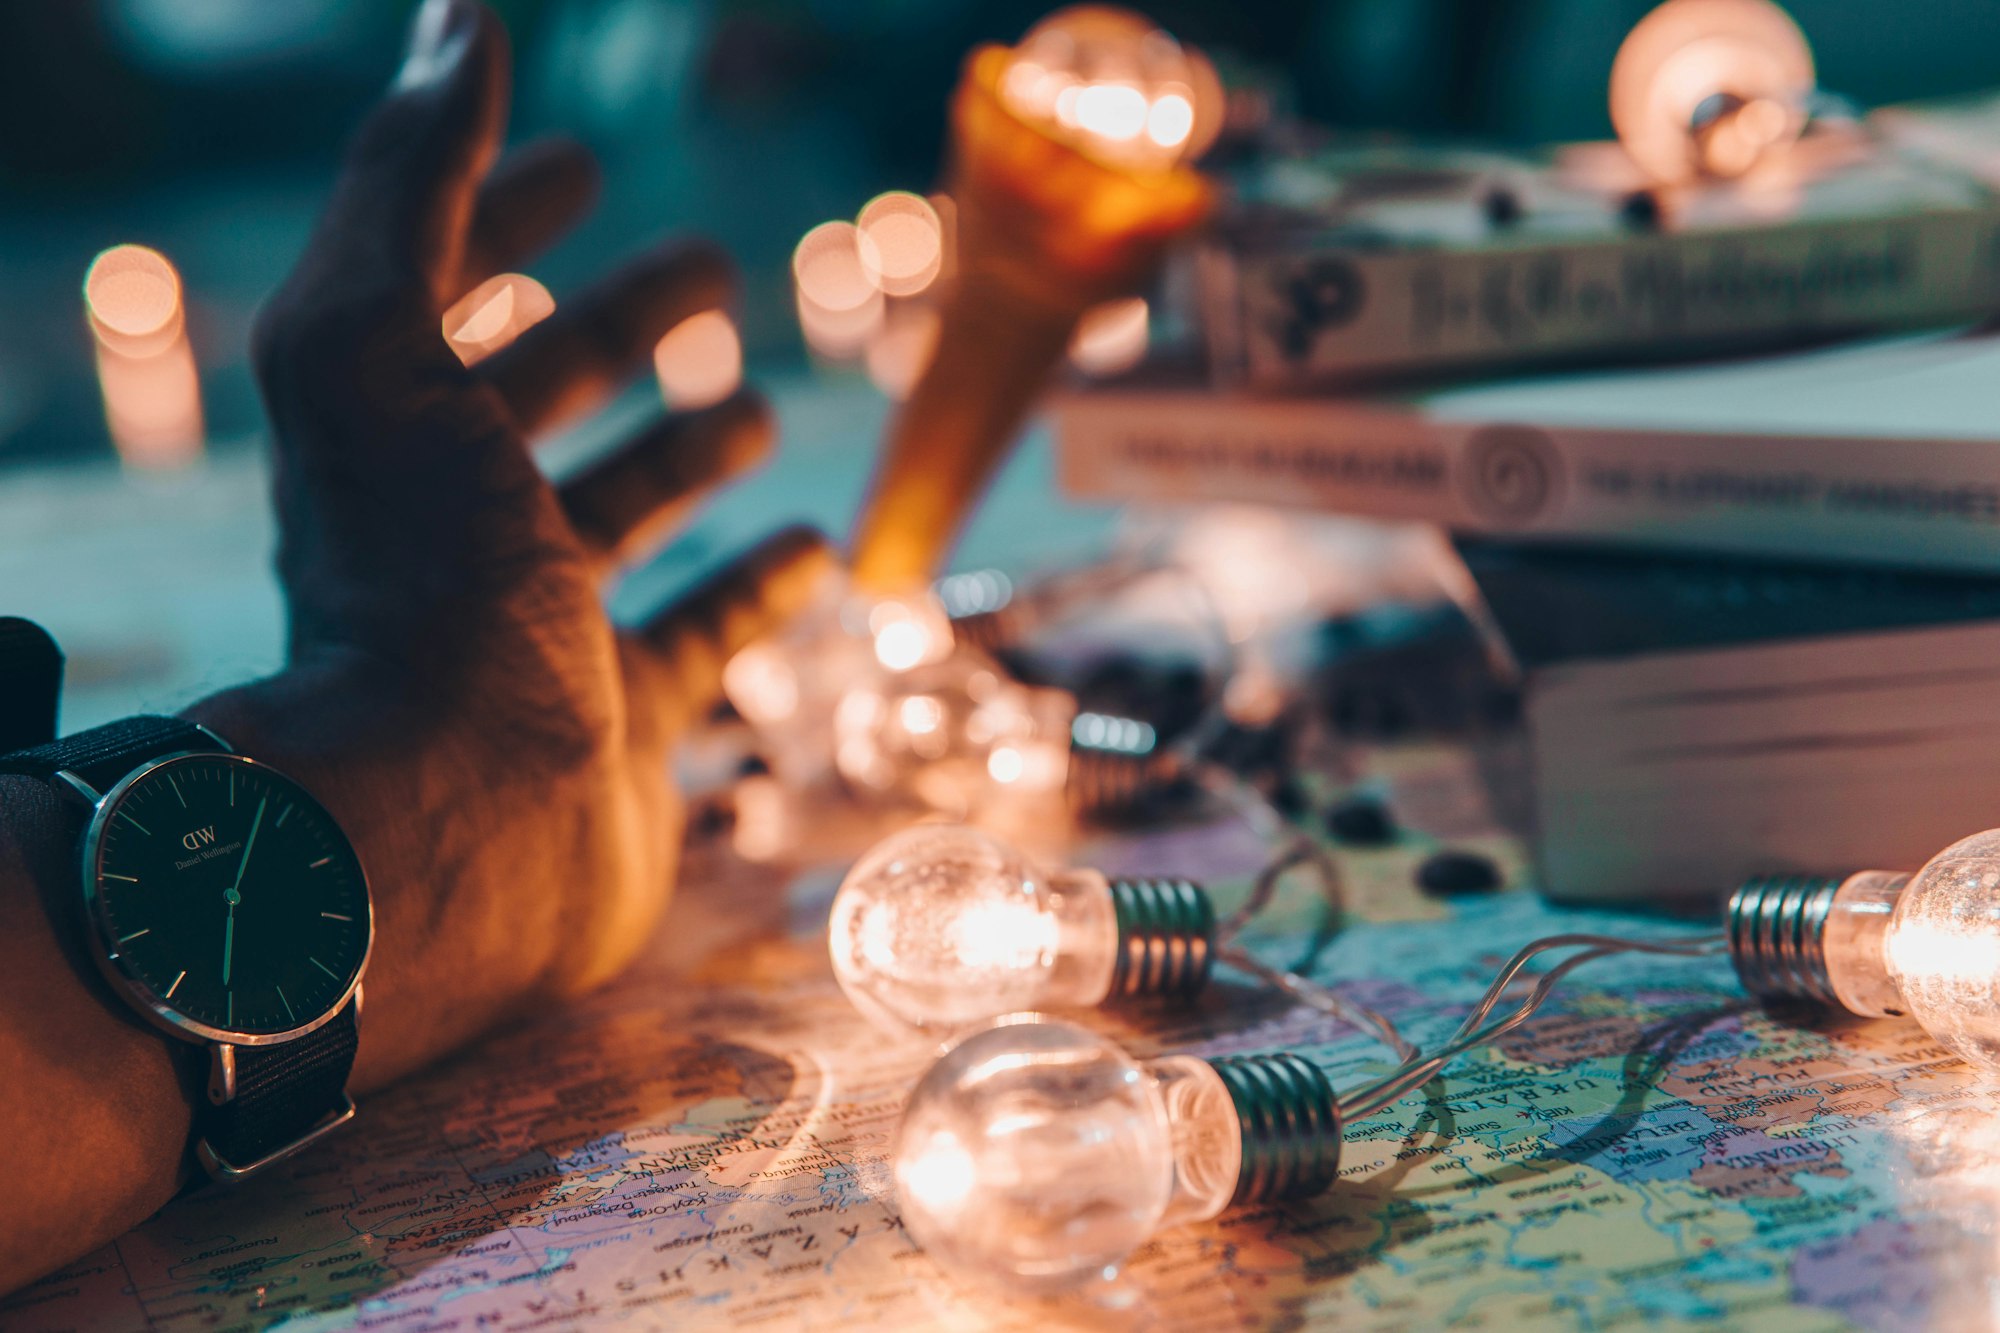 Lit lightbulbs and an open hand resting on a map